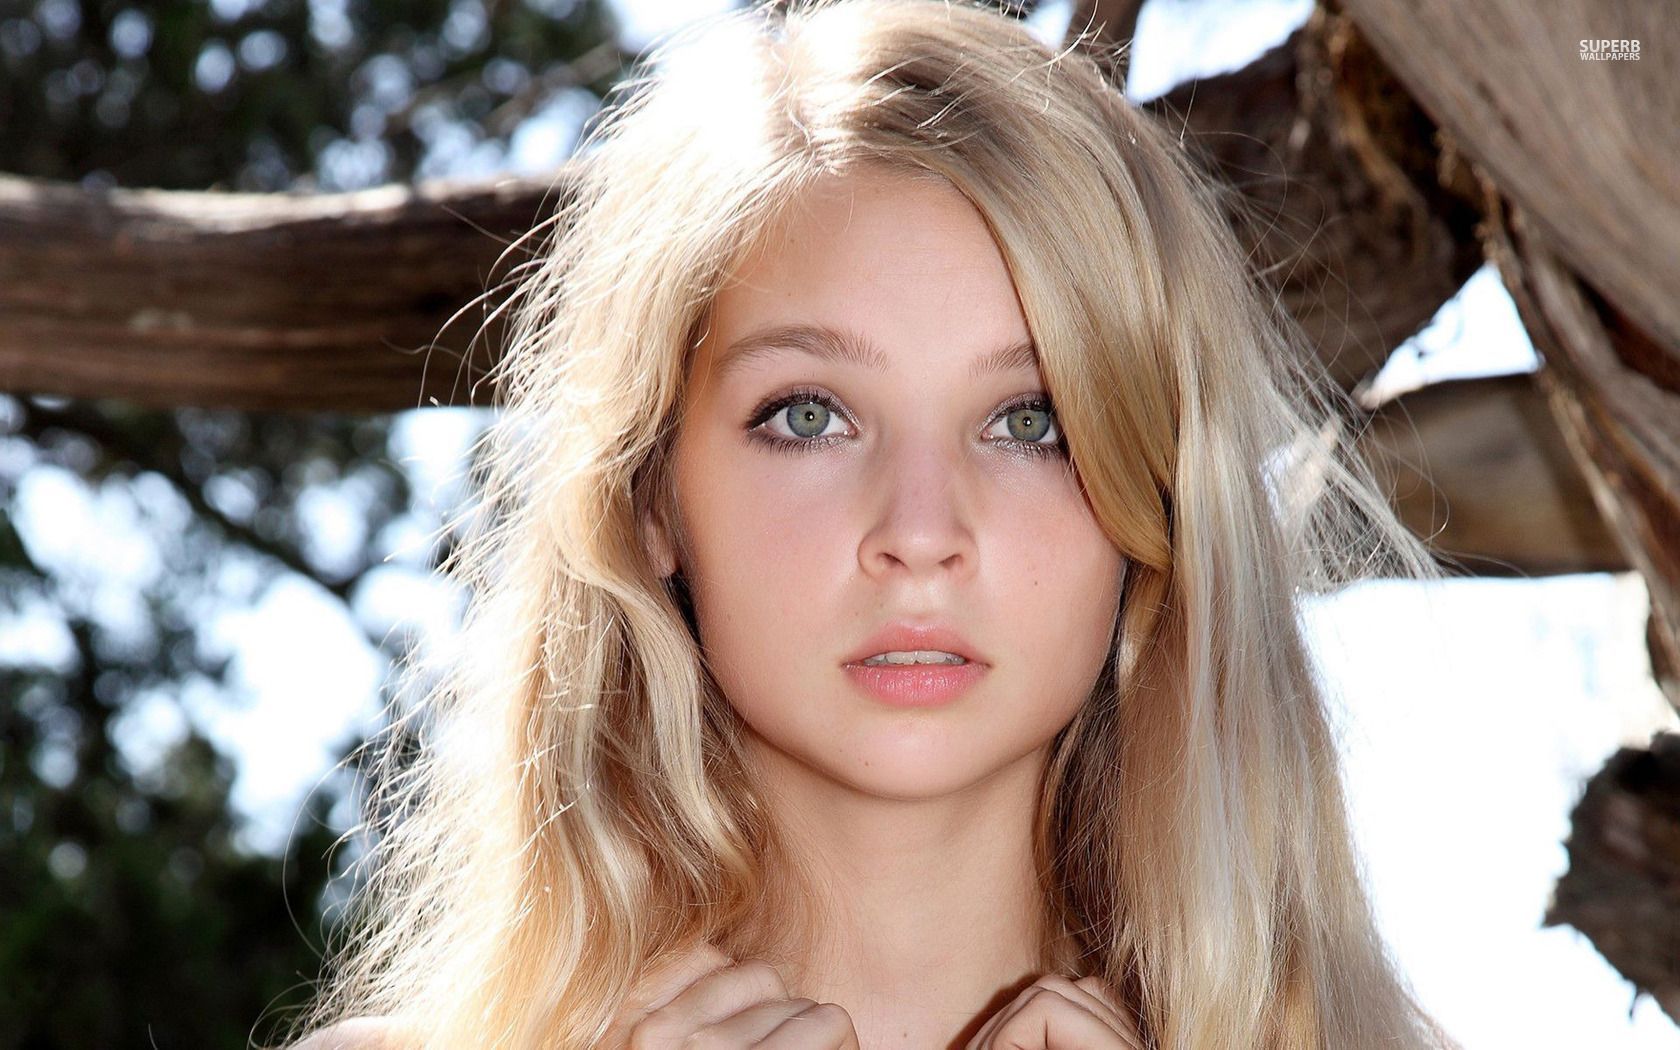 Beautiful blonde girl with green eyes portrait wallpaper - Girl ...